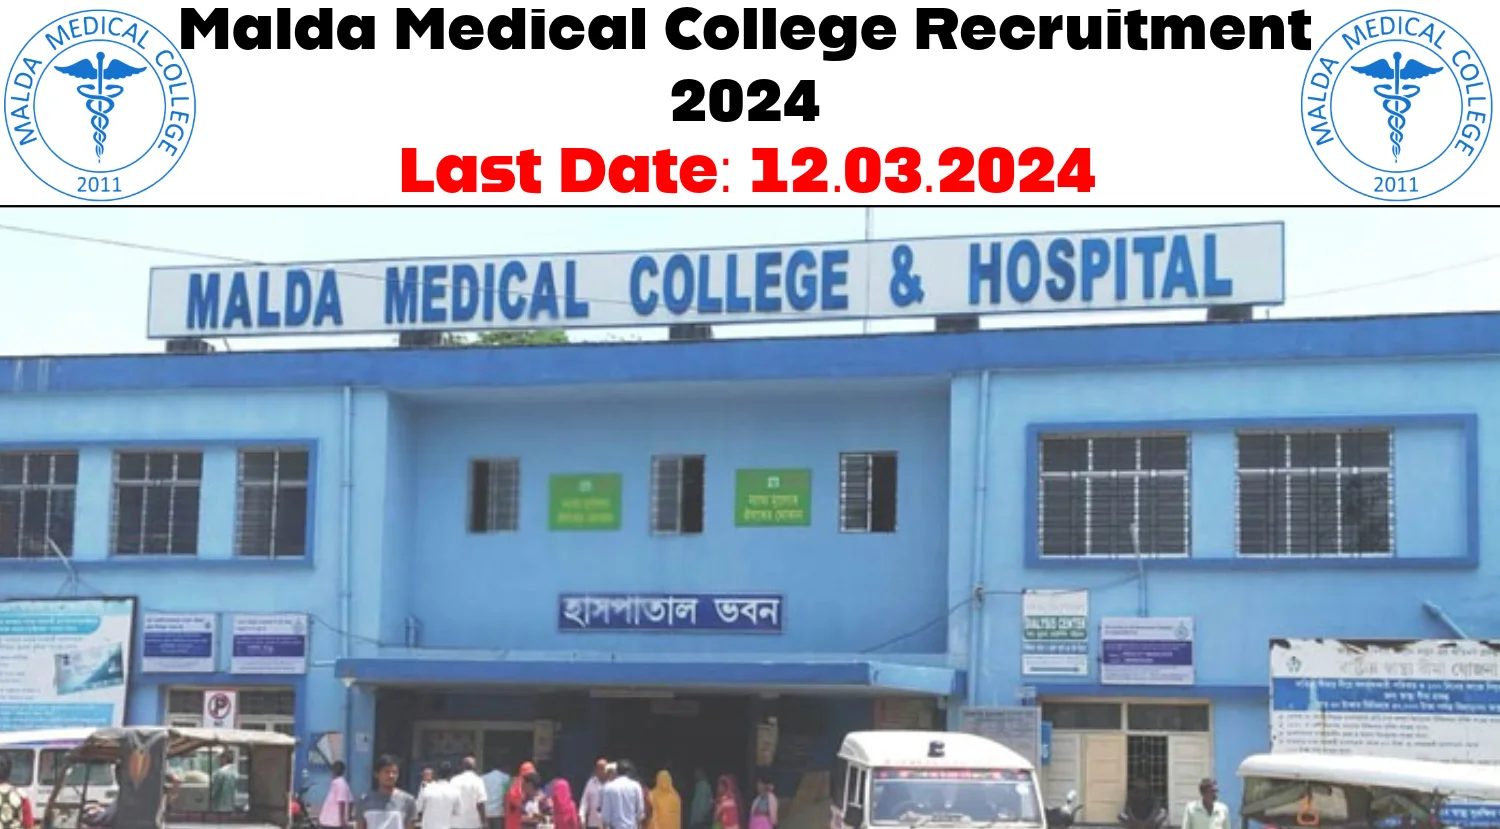 Malda Medical College Recruitment 2024, Check Important Details